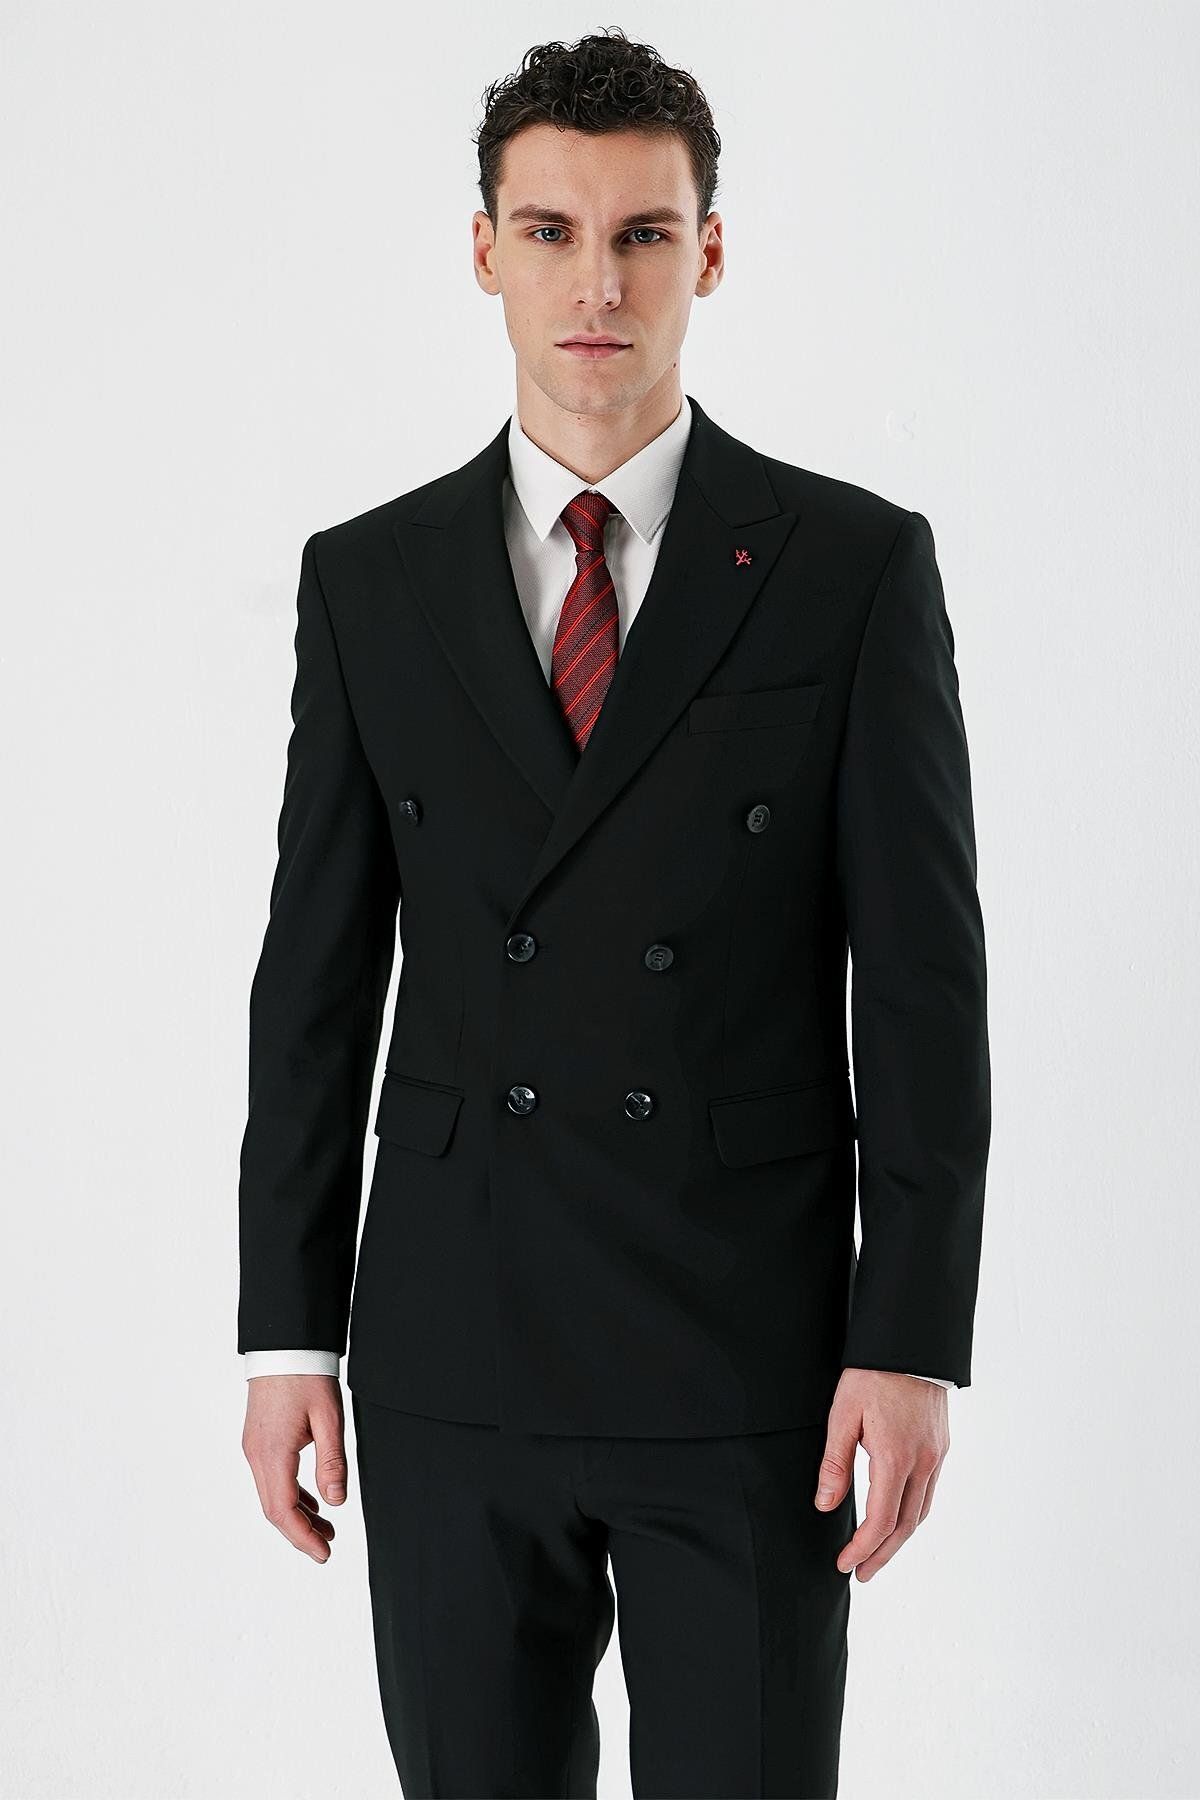 İmza Siyah Kırlangıç Yaka Kruvaze Likralı 6 Drop Slim Fit Dar Kesim Klasik Takım Elbise 1001240166